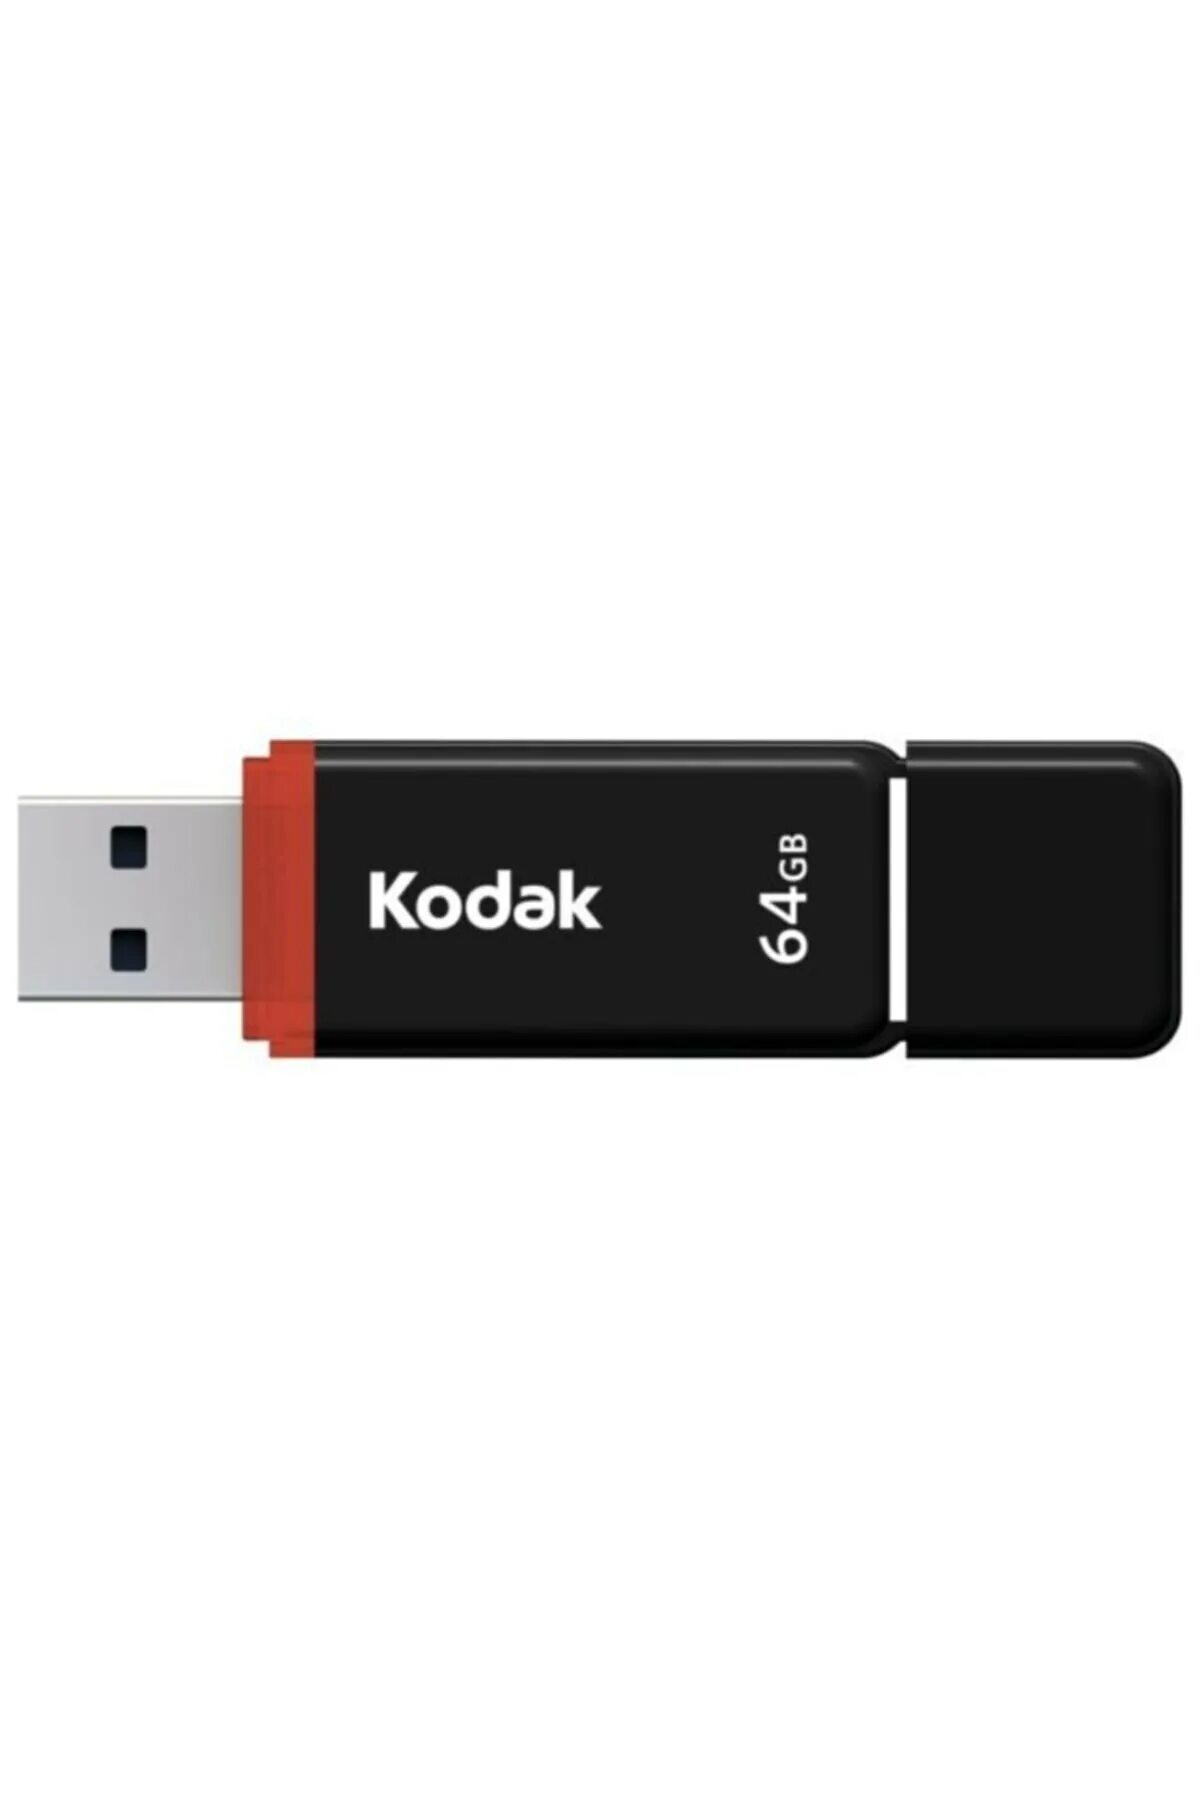 Флешка Кодак 64 ГБ. Флешки флеш-накопитель USB 2.0 16gb флешка. Флешка Emtec m600 16gb. Флешка MAXFLASH USB Drive 2.0 16gb. Купить флешку 64гб